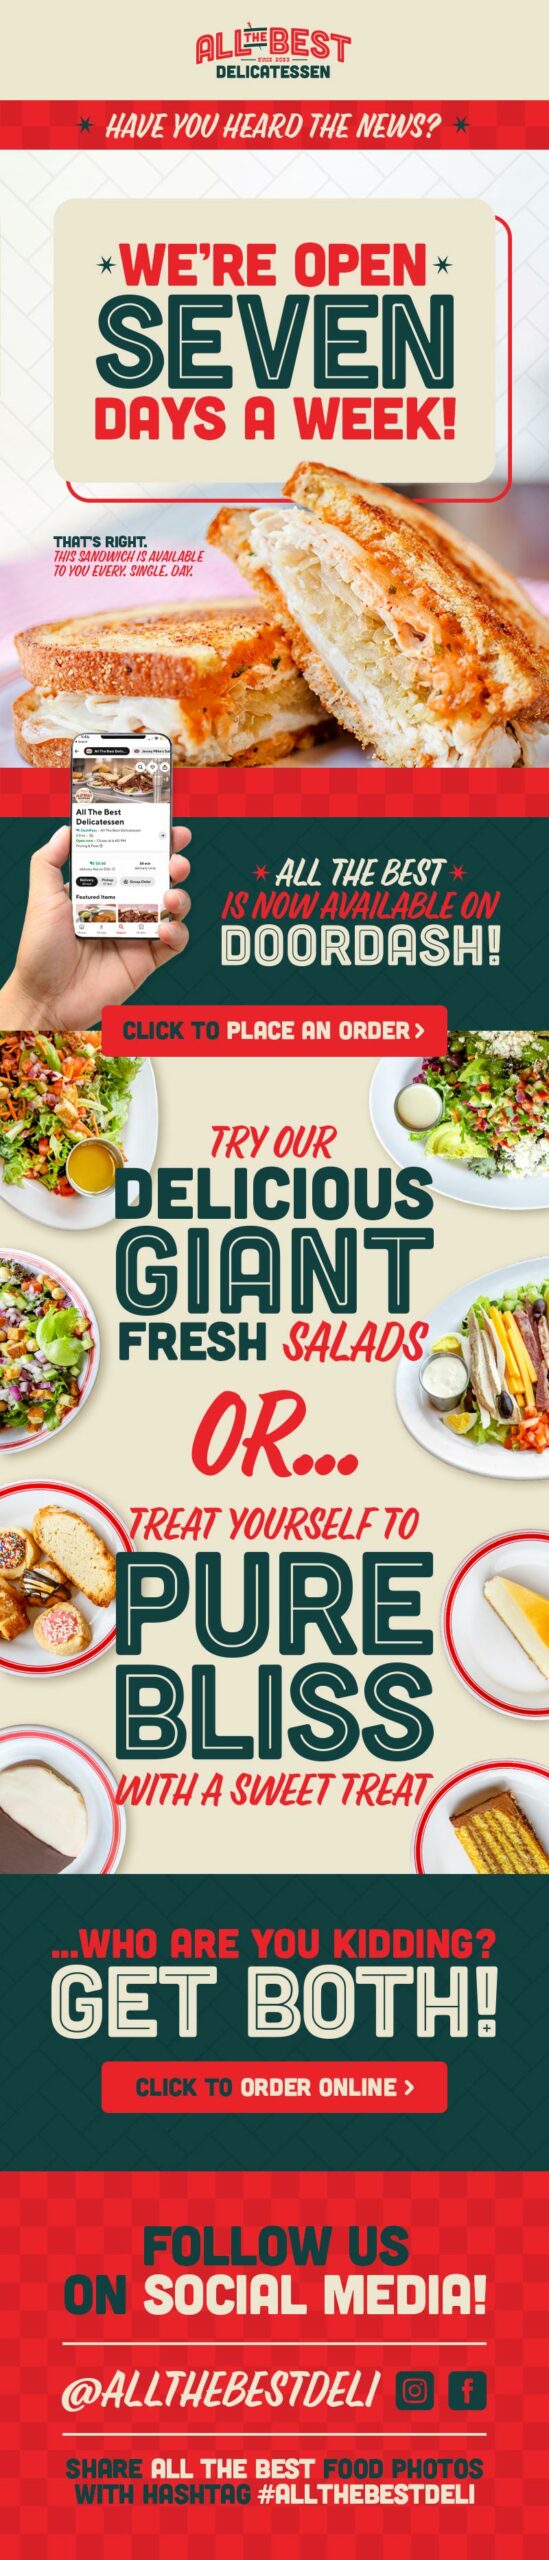 All The Best restaurant email marketing design